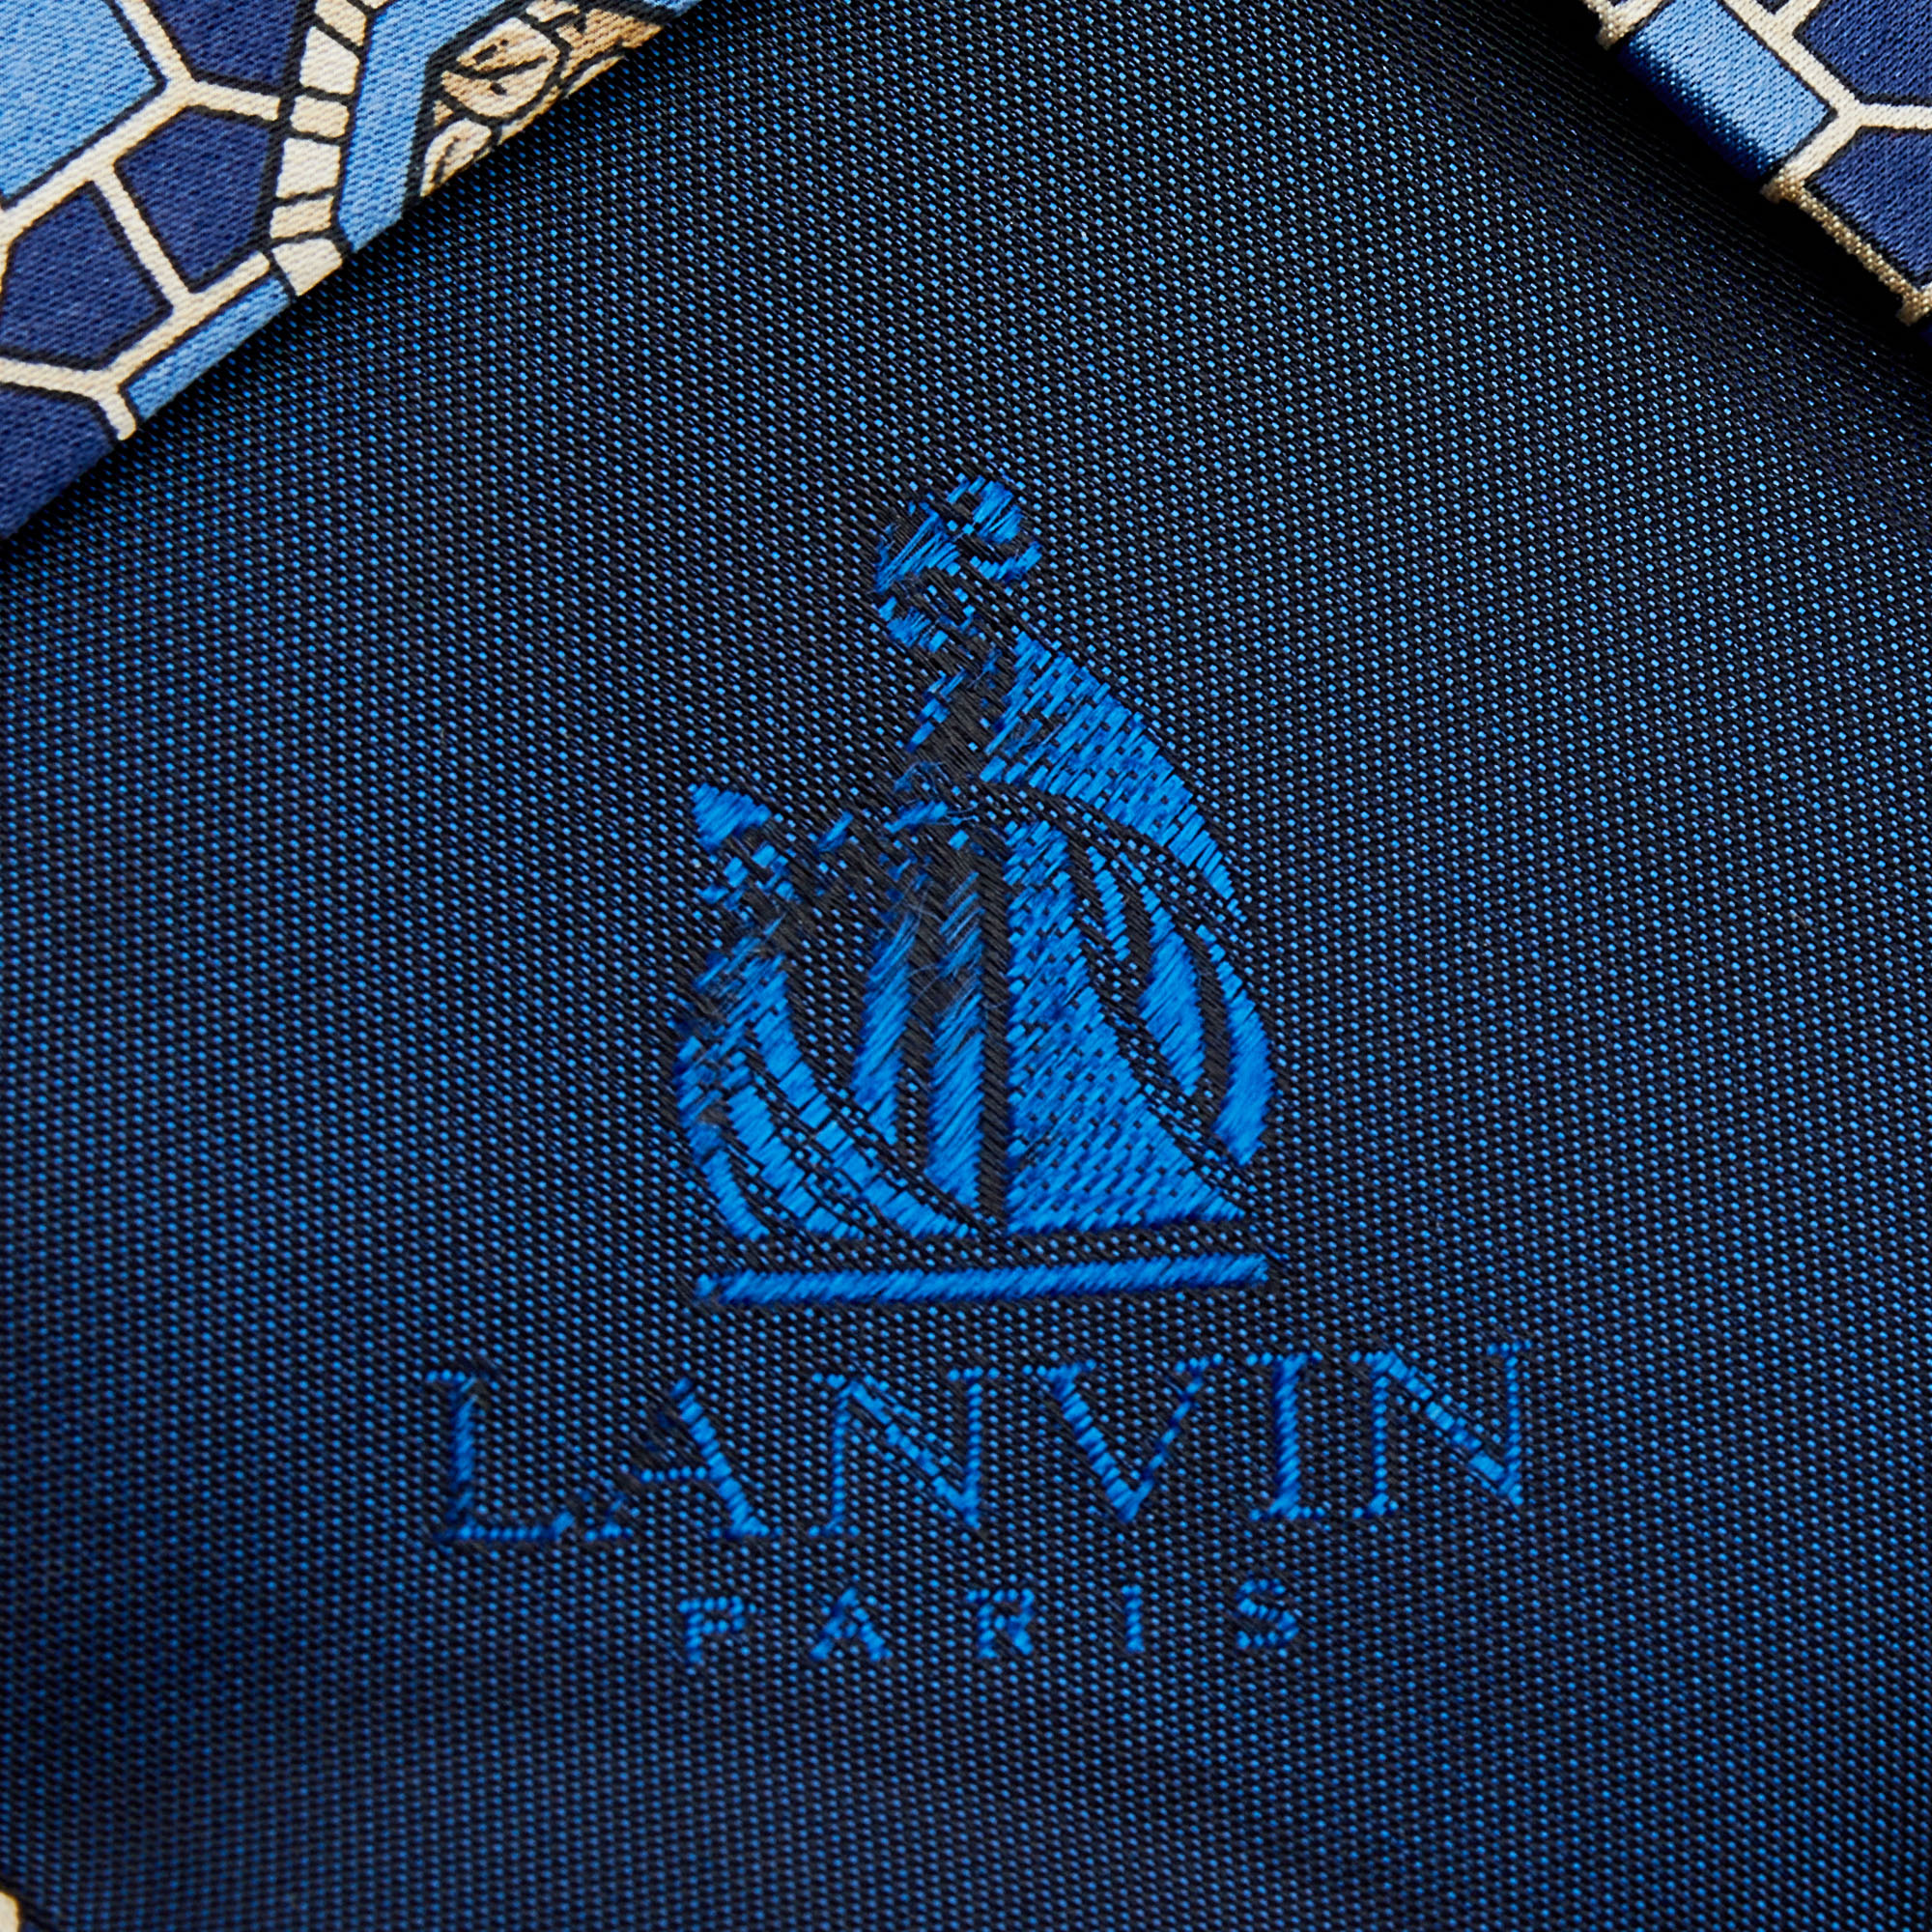 Lanvin Blue Geometric Motif Silk Tie